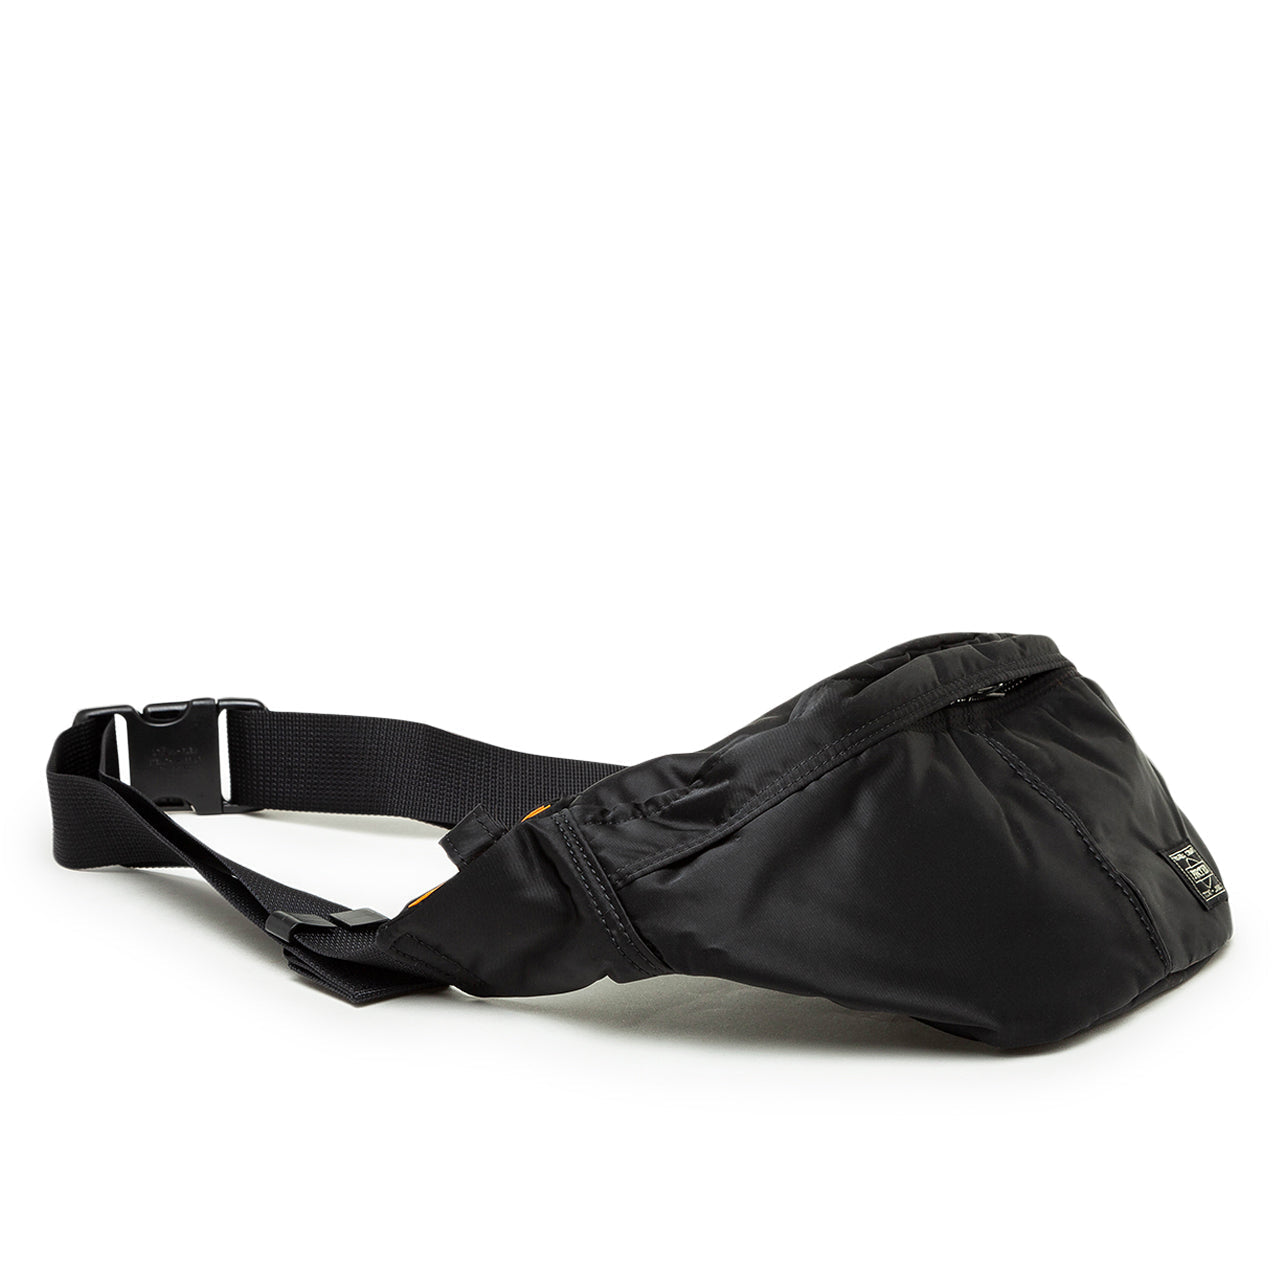 porter by yoshida tanker waist bag s (black) - 622-76629-10 - a 